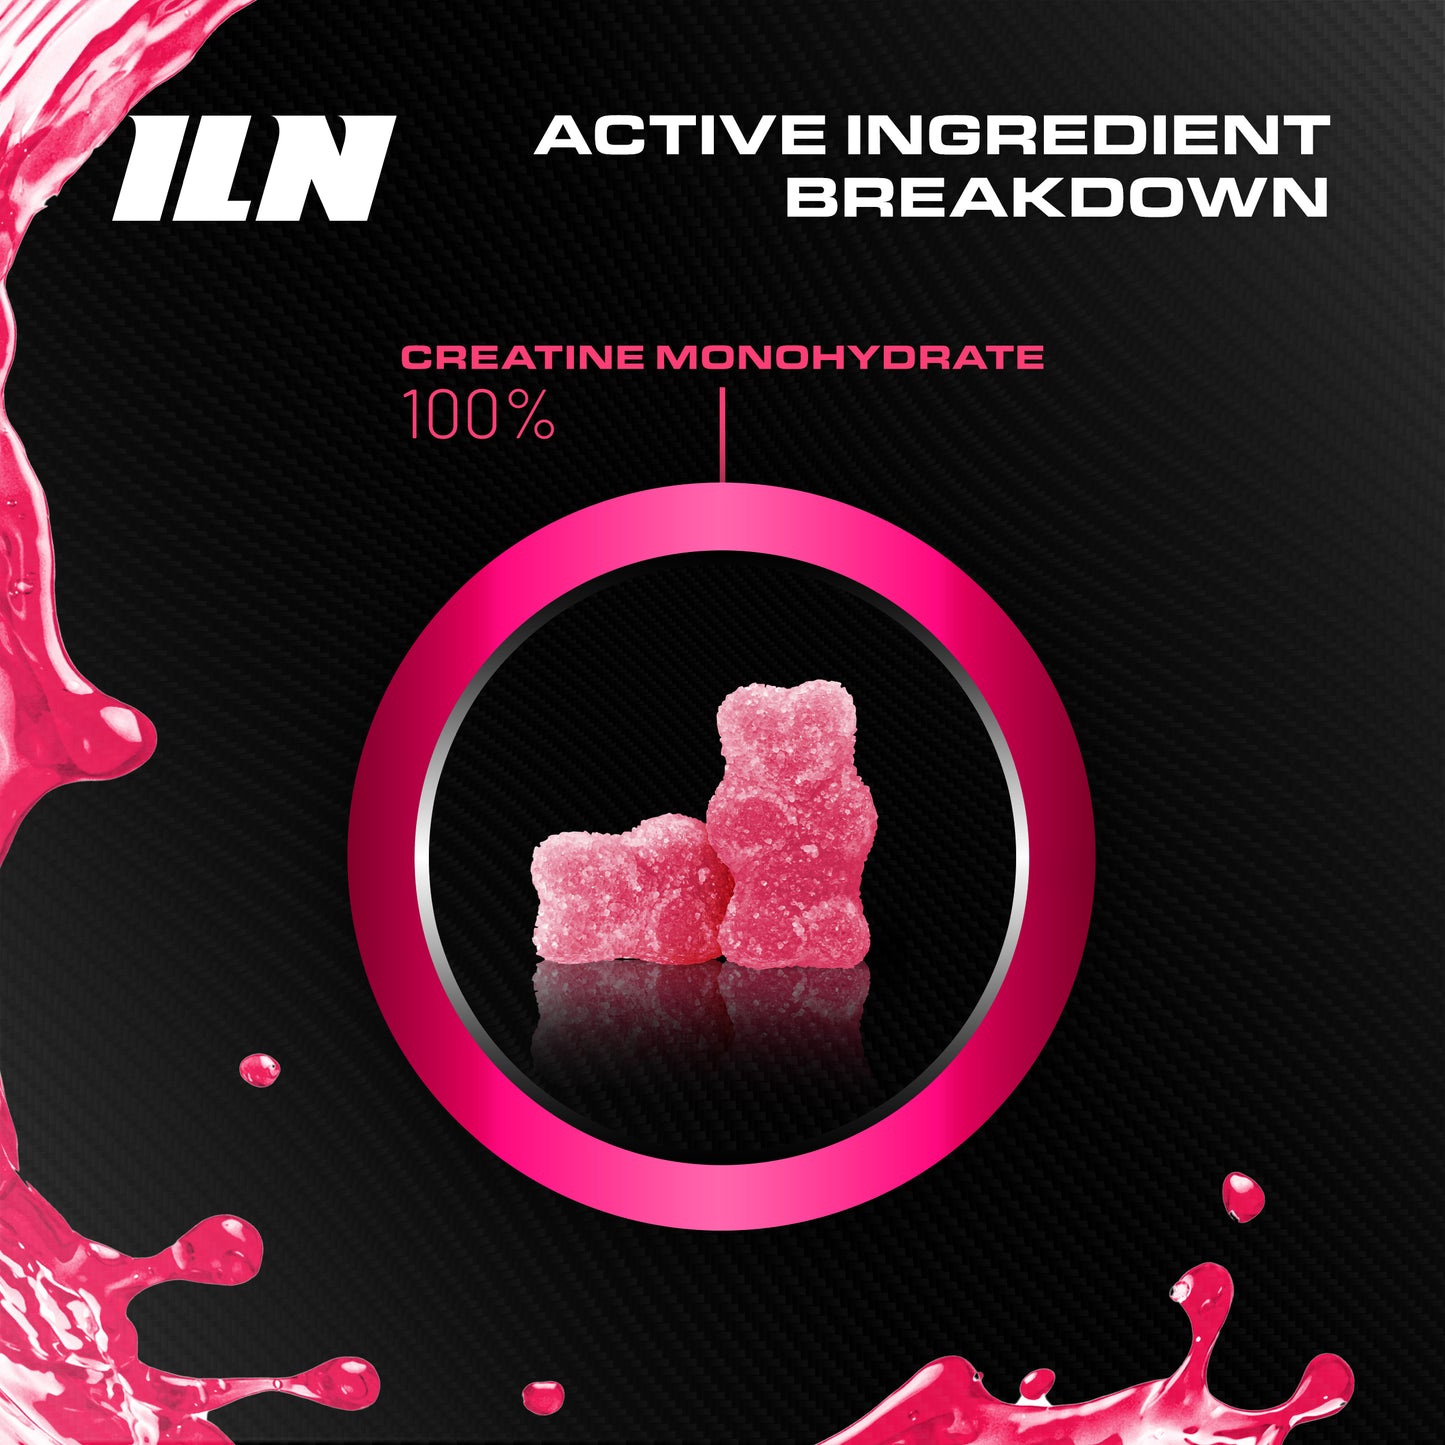 Creatine Gummies High Strength (2 Pack)